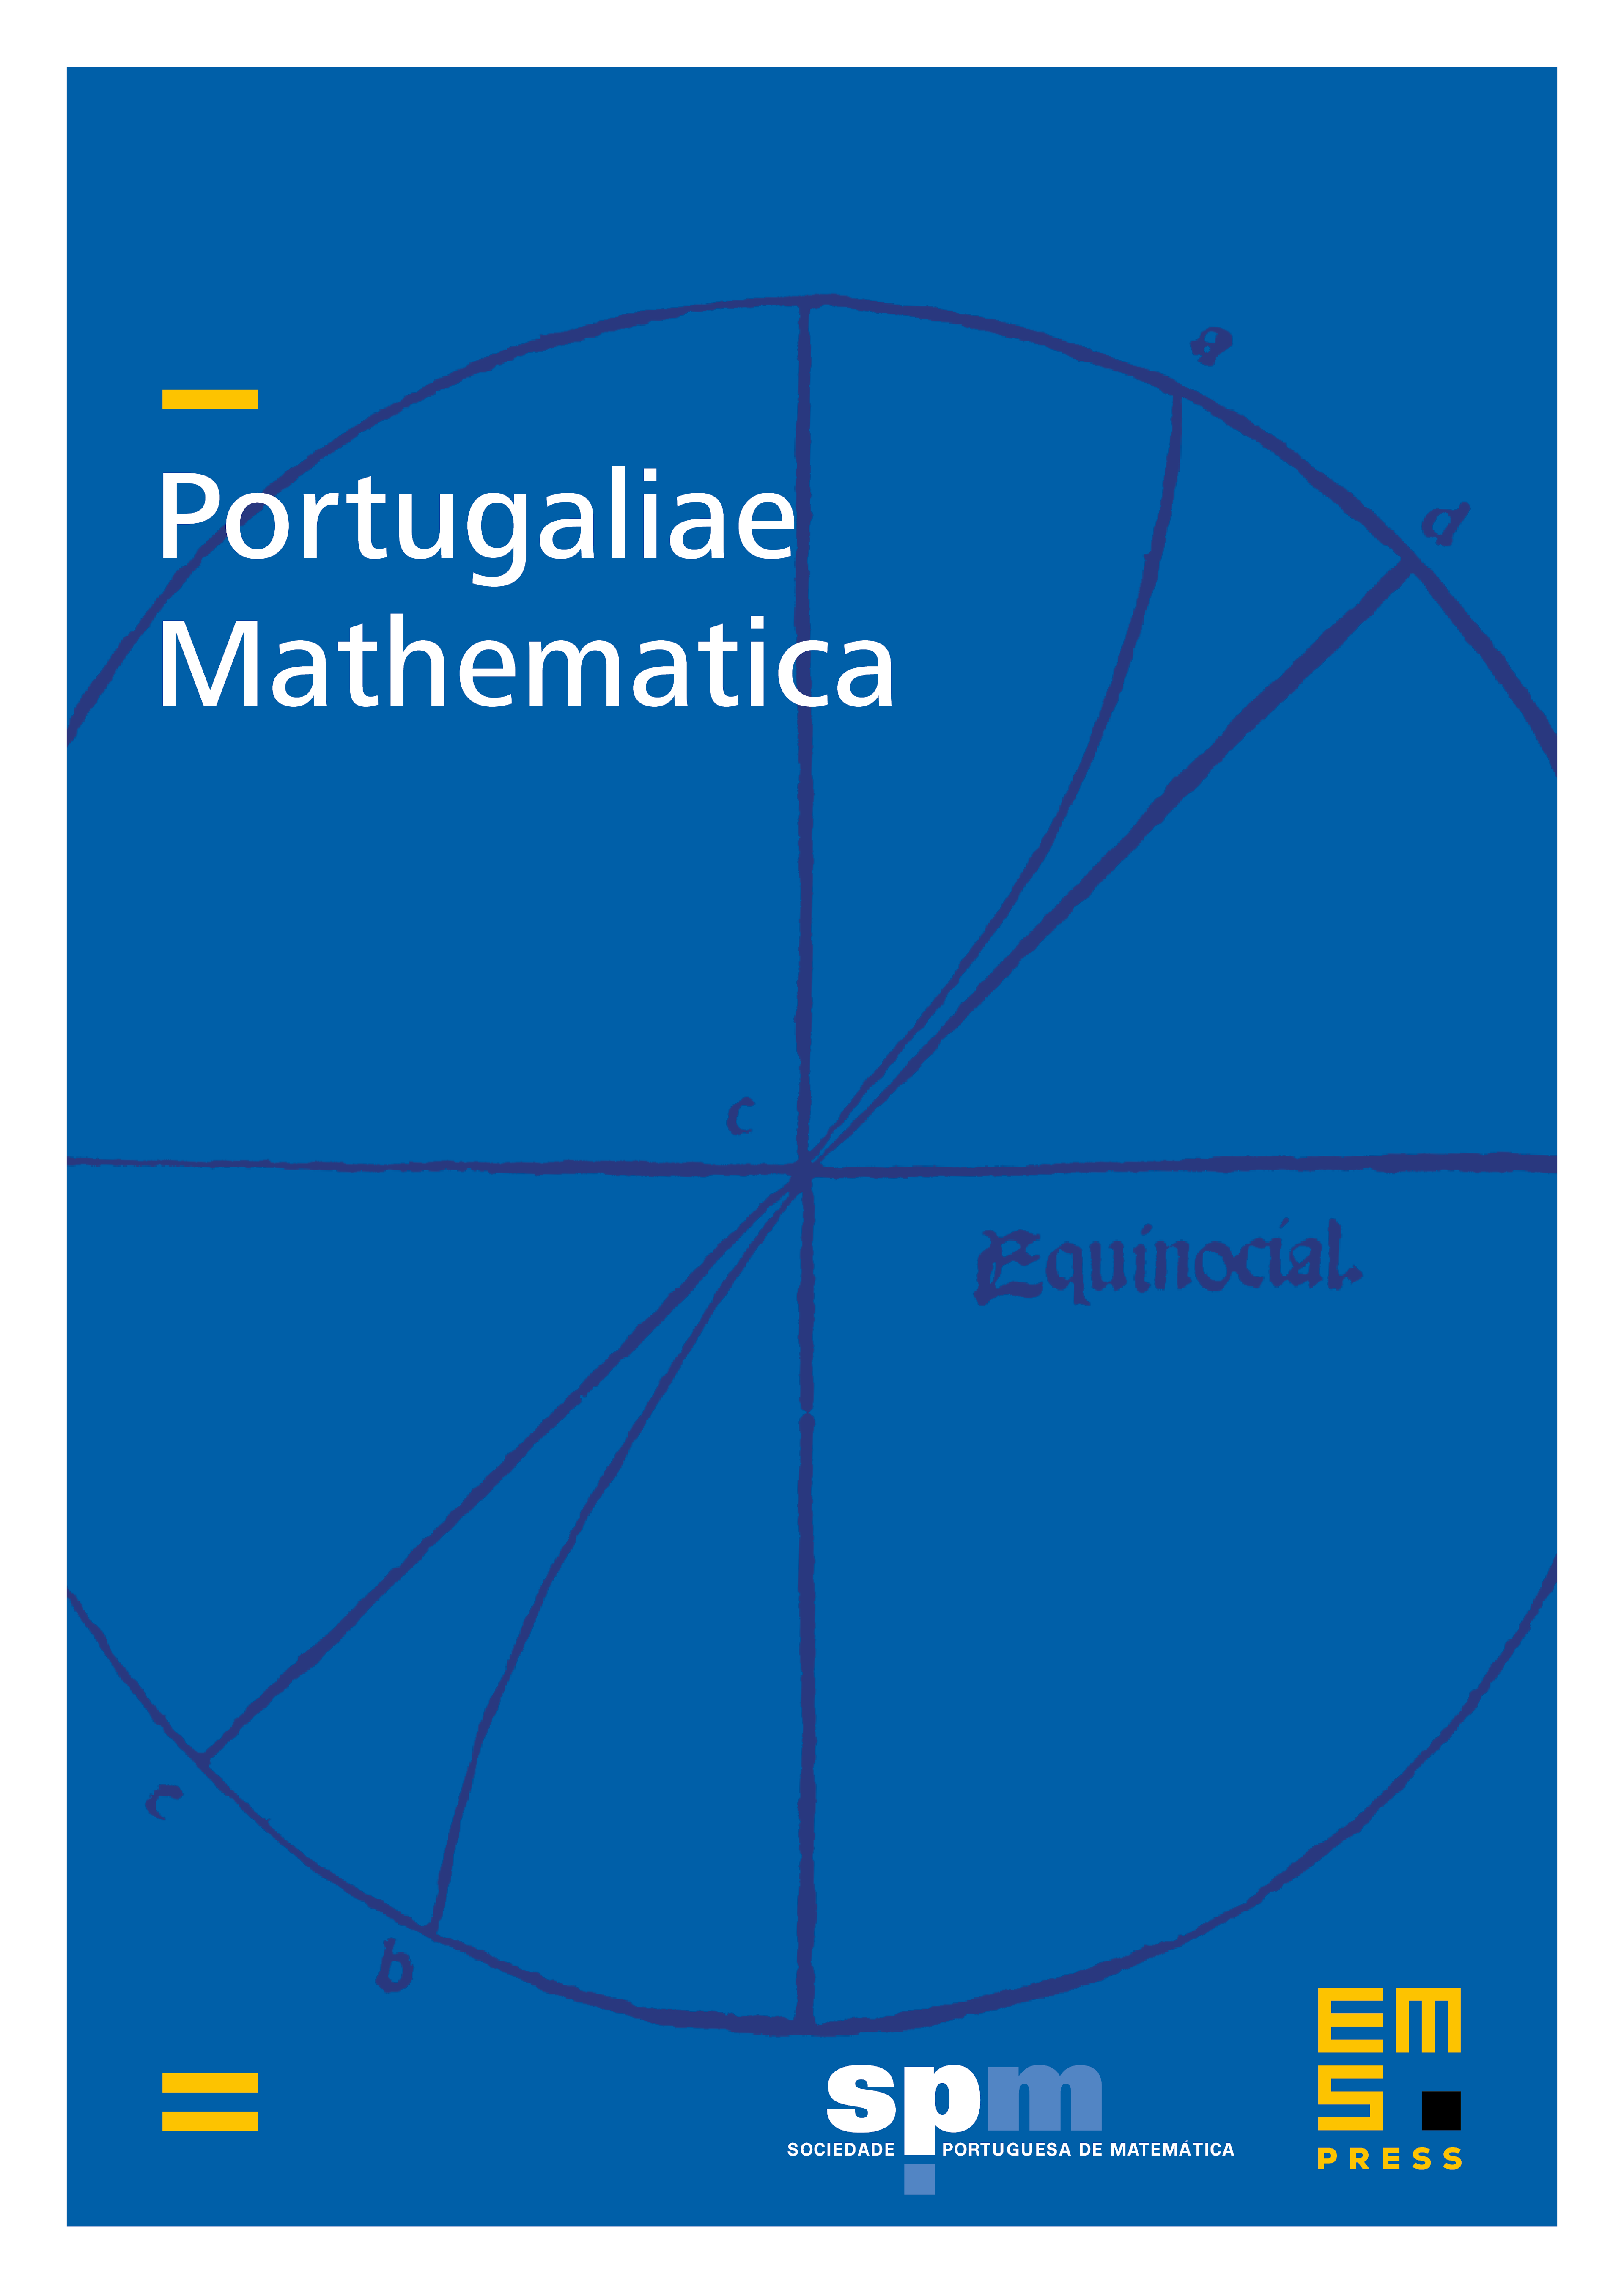 Port. Math. cover